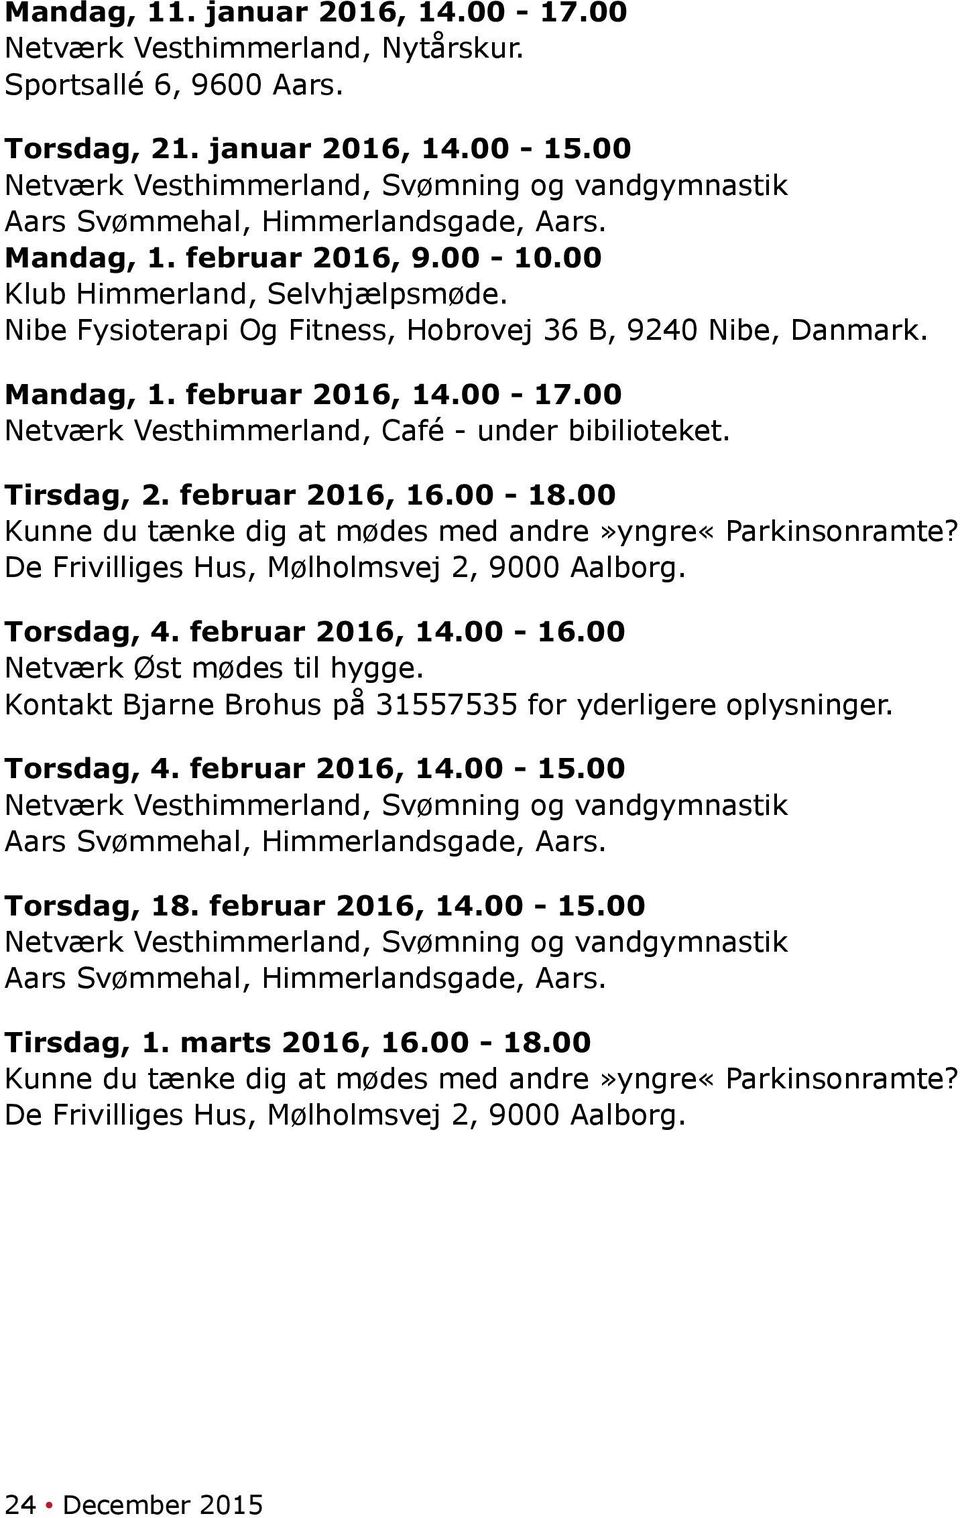 Nibe Fysioterapi Og Fitness, Hobrovej 36 B, 9240 Nibe, Danmark. Mandag, 1. februar 2016, 14.00-17.00 Netværk Vesthimmerland, Café - under bibilioteket. Tirsdag, 2. februar 2016, 16.00-18.